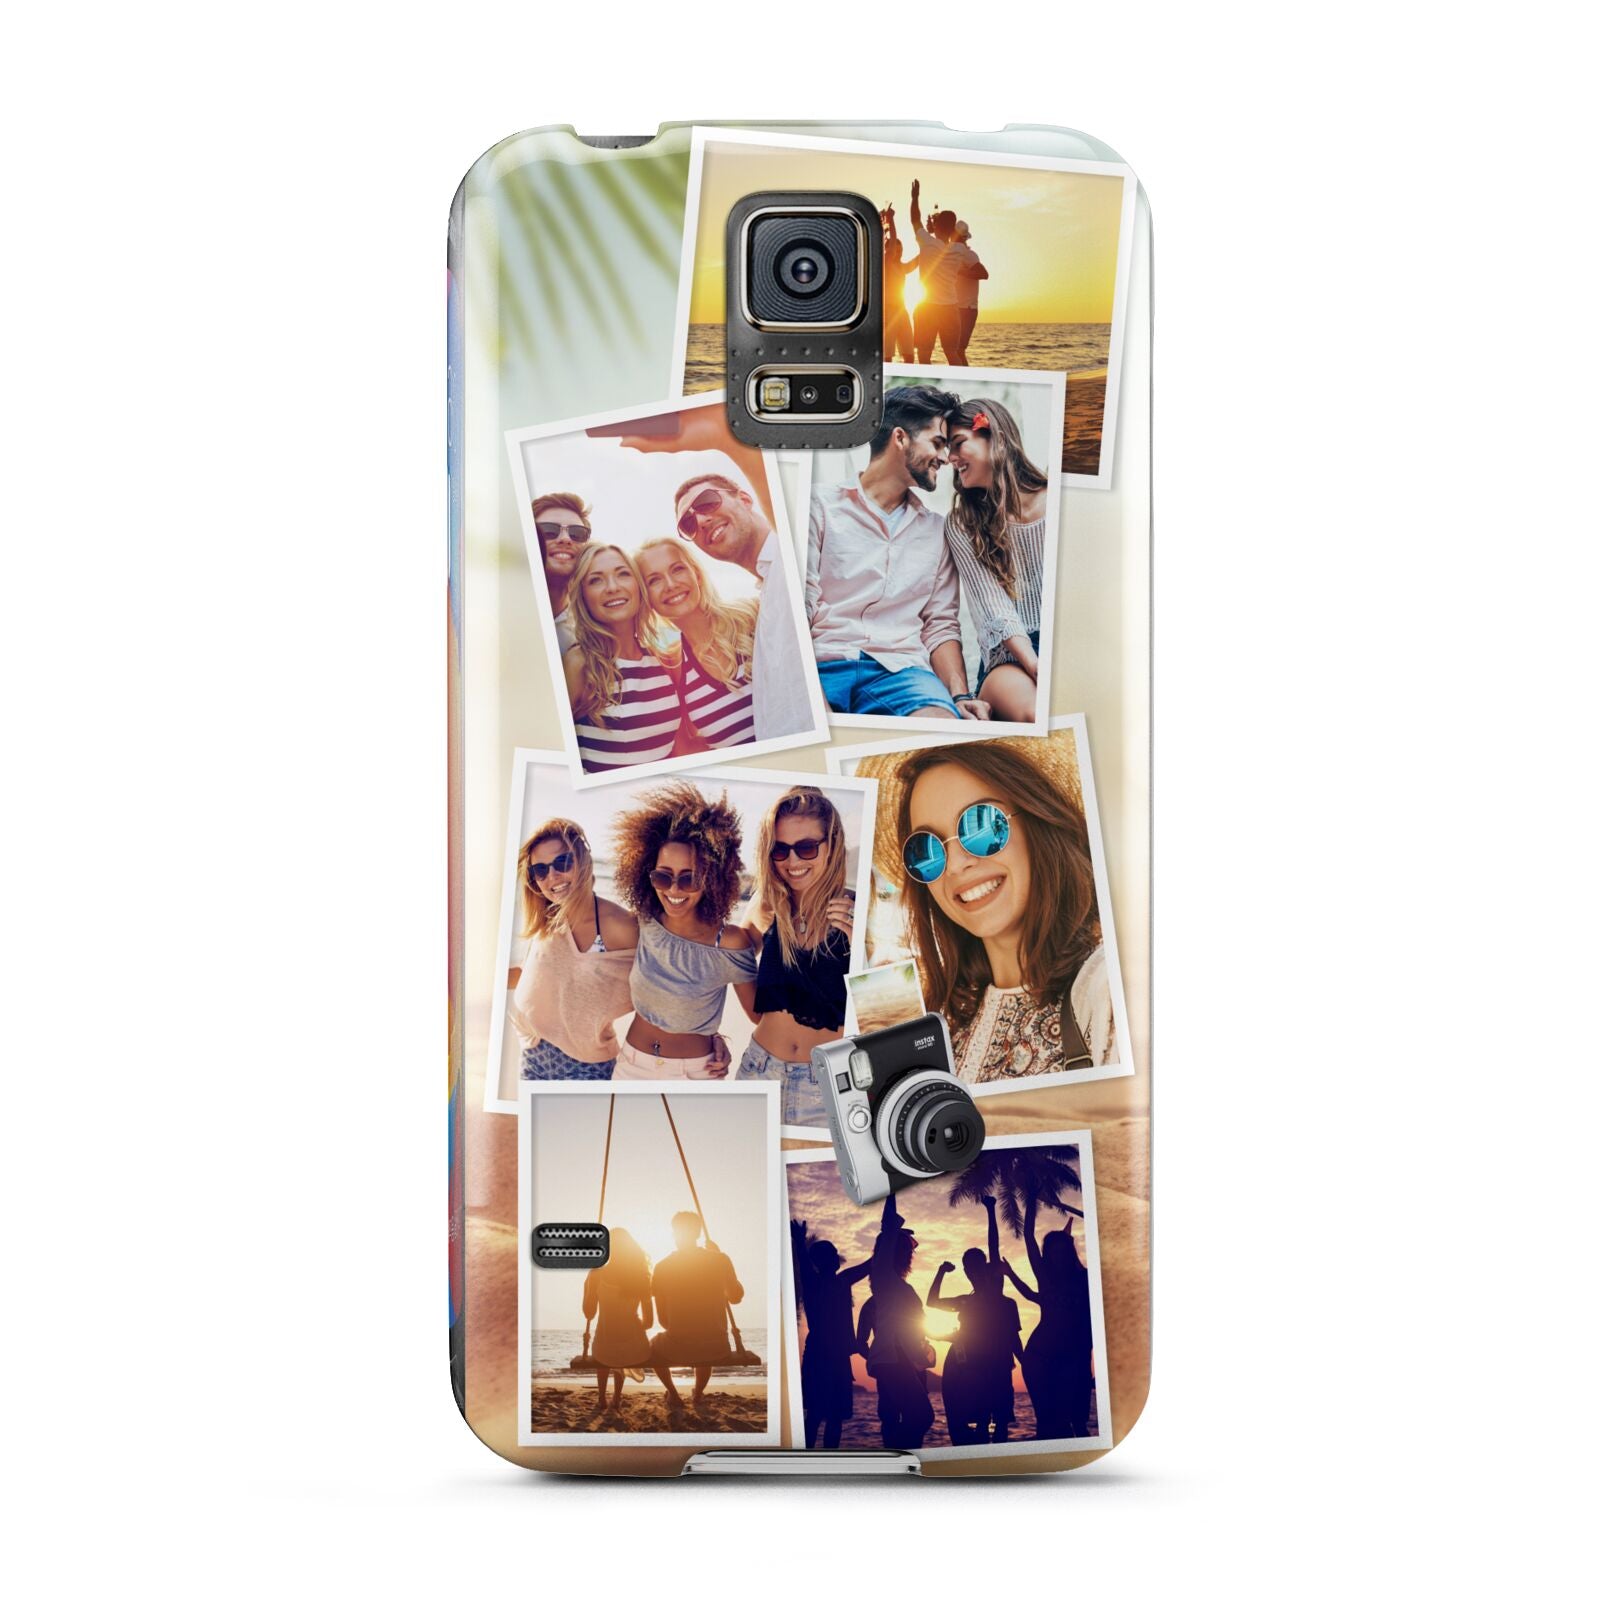 Personalised Summer Holiday Photos Samsung Galaxy S5 Case